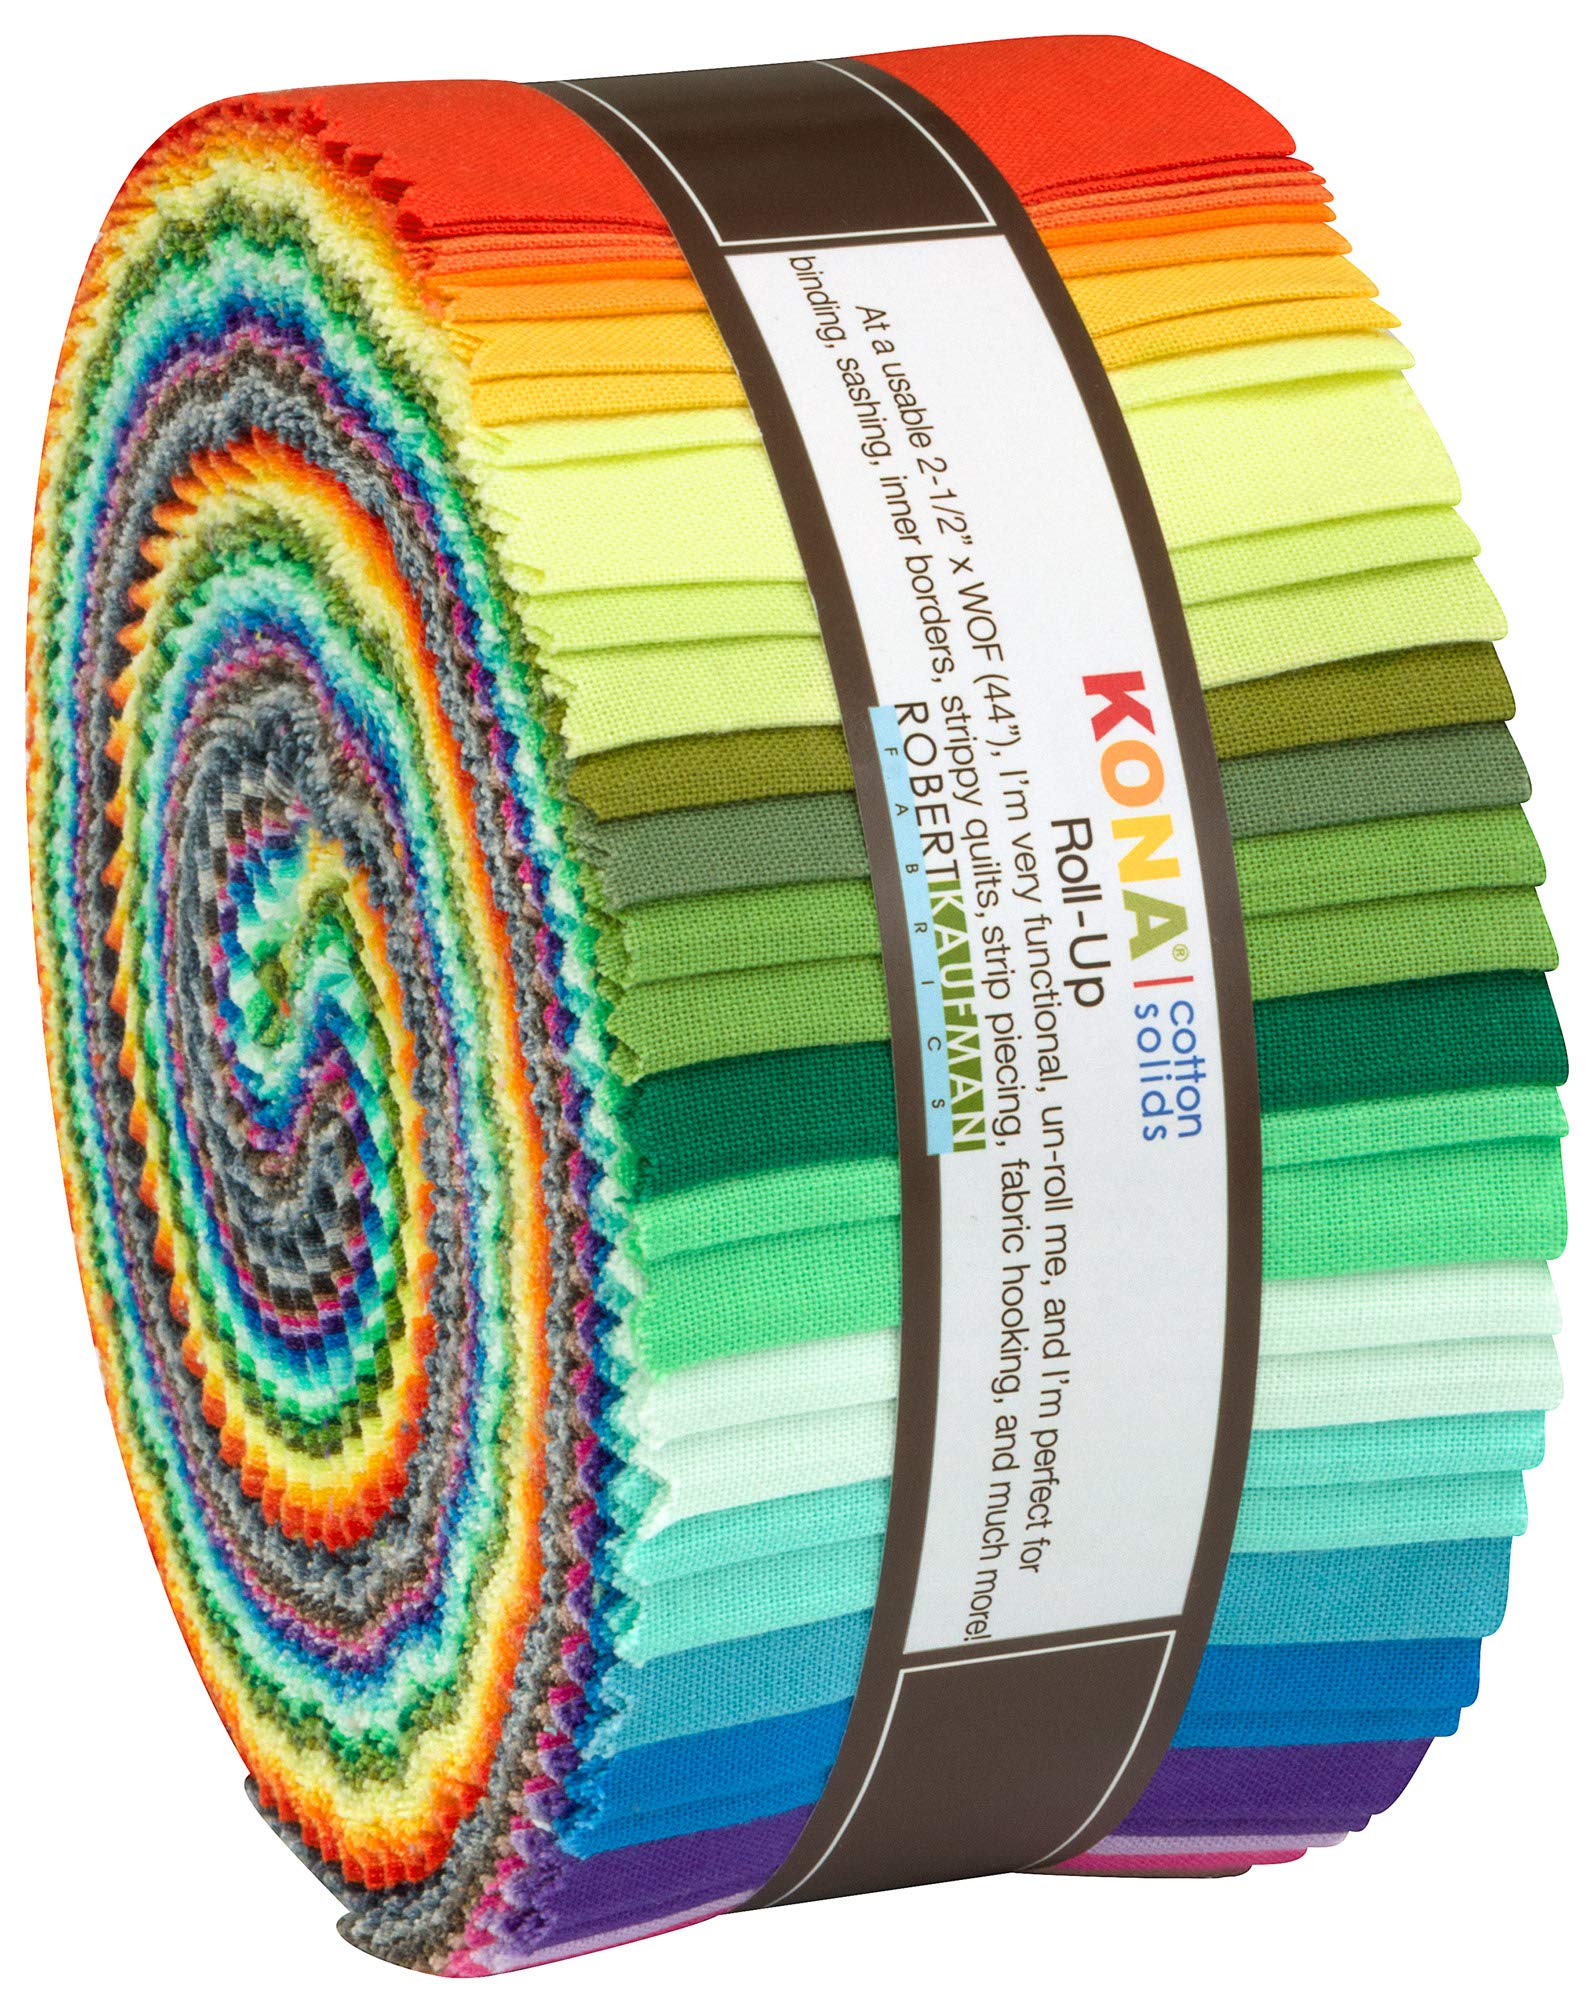 Kona Cotton Solids 2019 Roll Up 40 2.5-inch Strips Jelly Roll Robert Kaufman RU-889-40